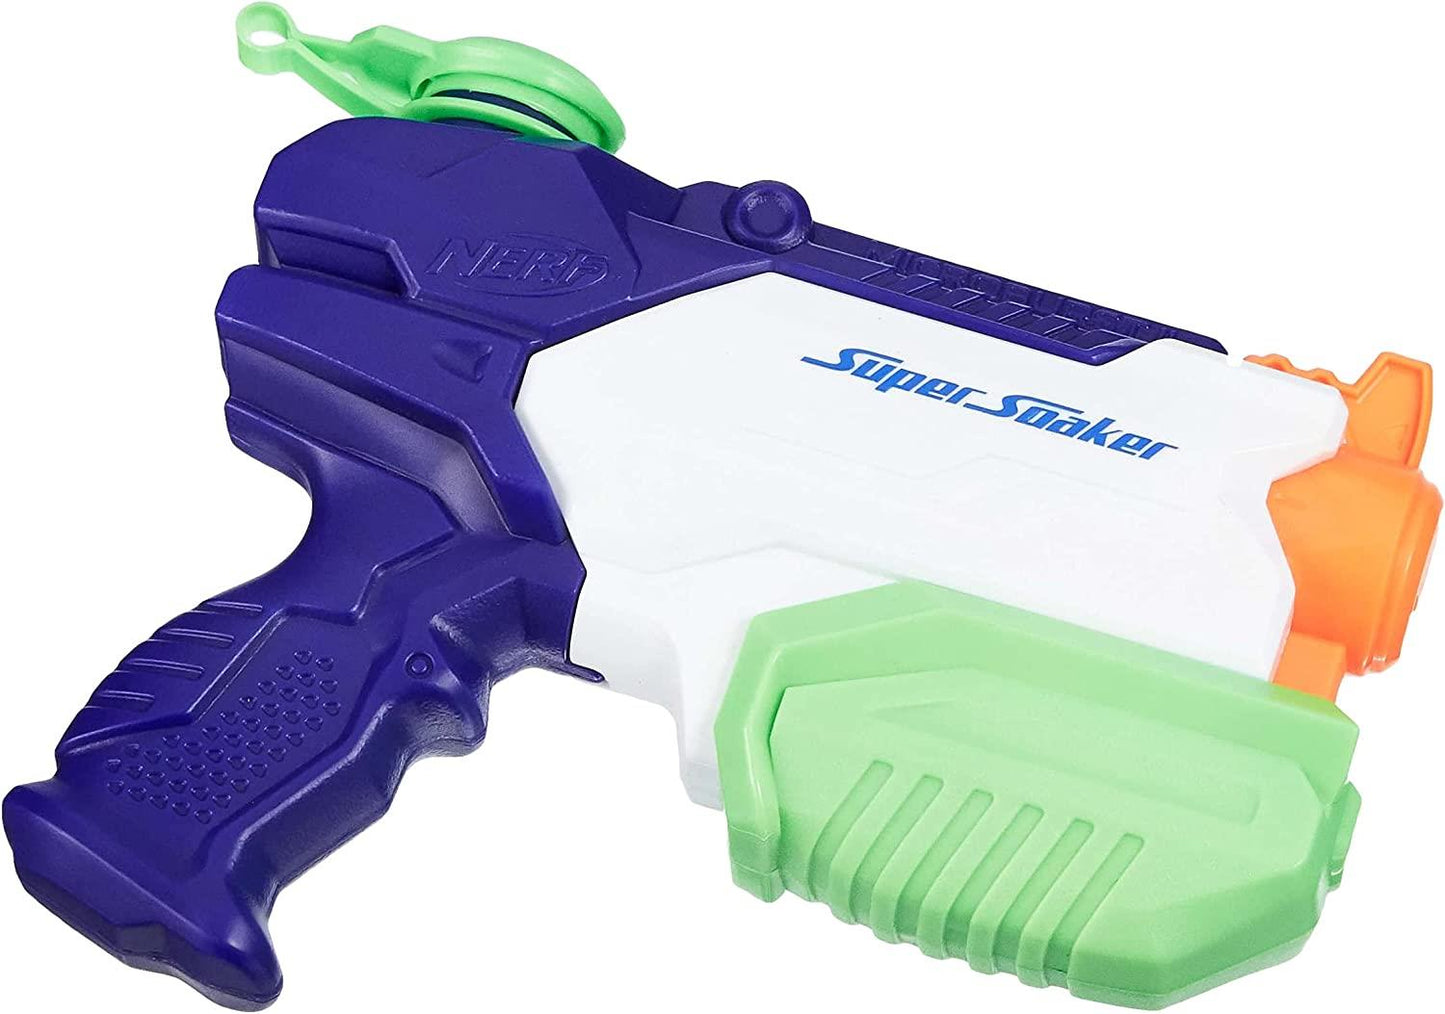 NERF Microburst 2 Water Blaster A9461 Super Soaker Toy Gun